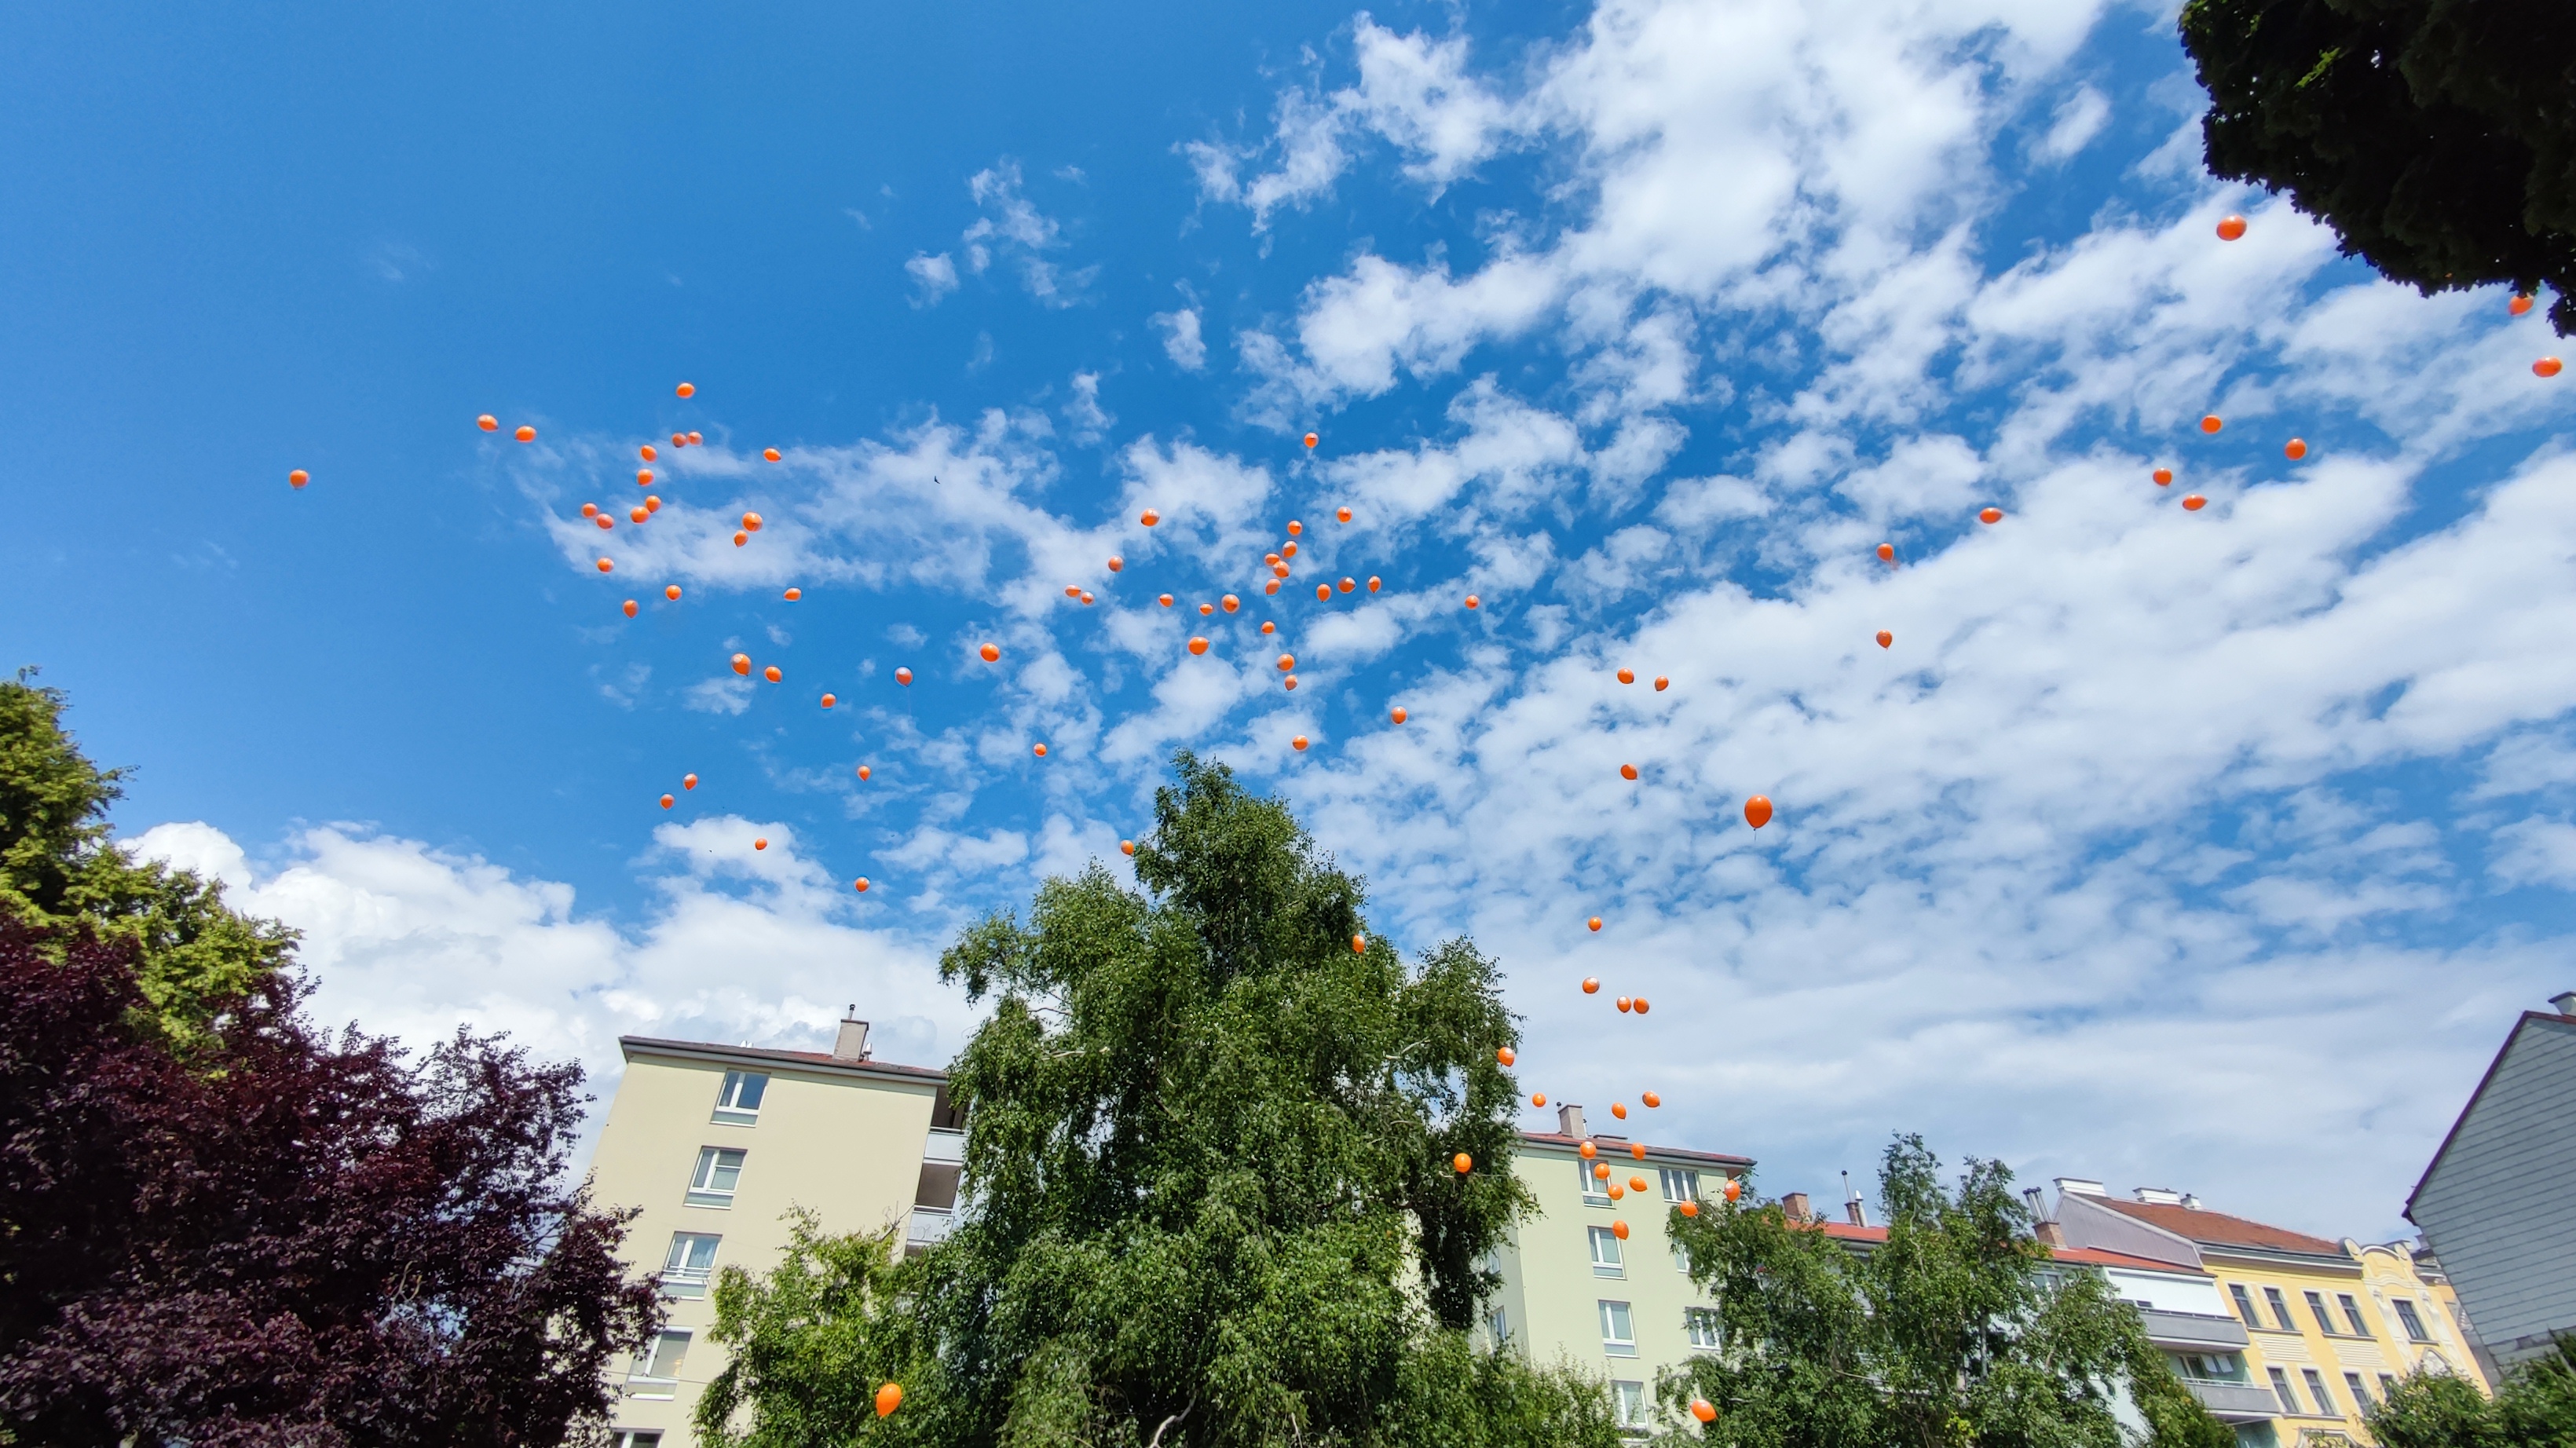 Luftballons.jpg